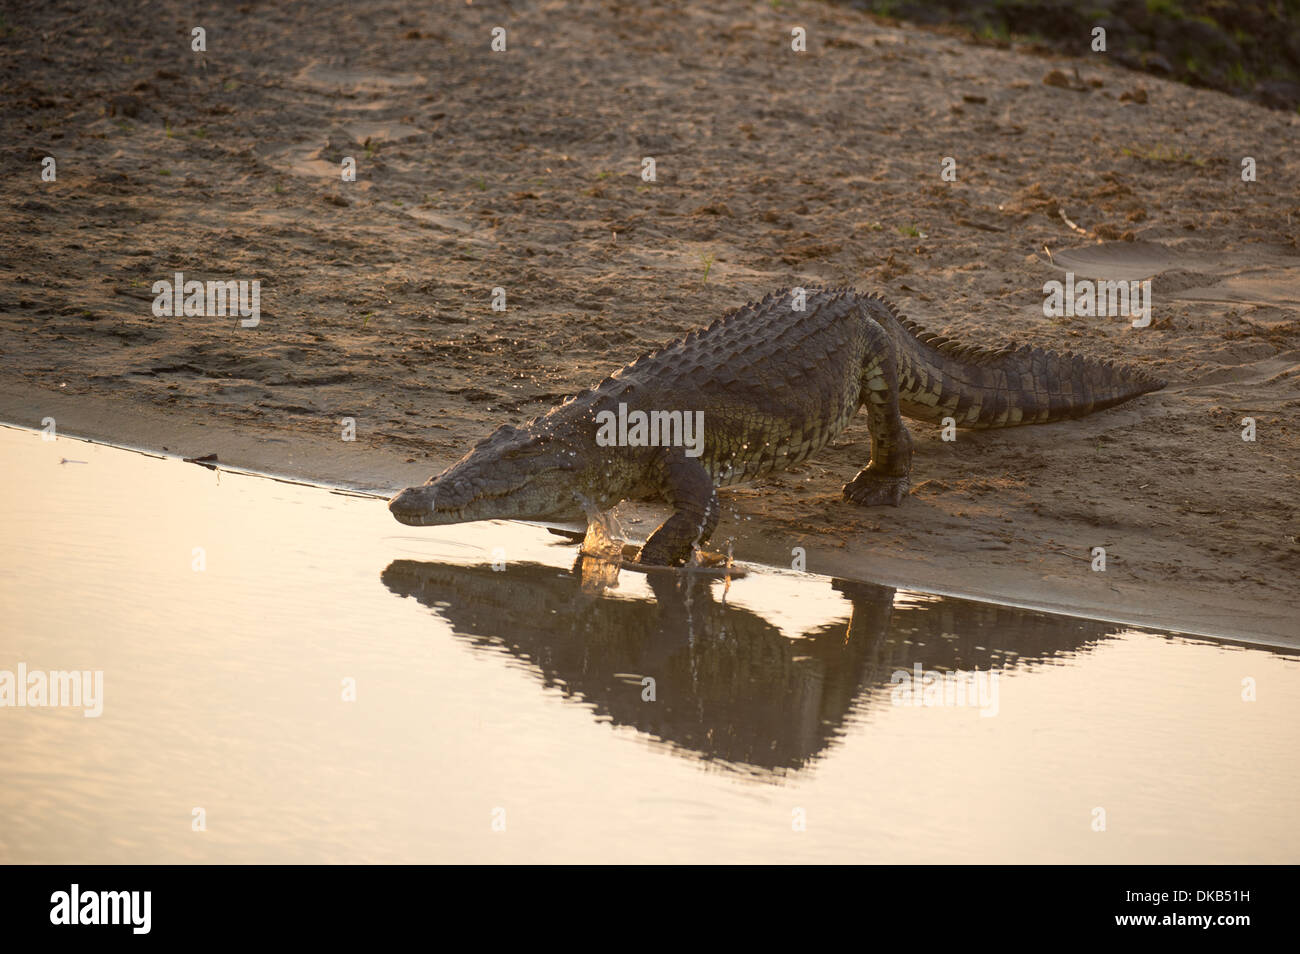 Nile crocodile walking hi-res stock photography and images - Alamy